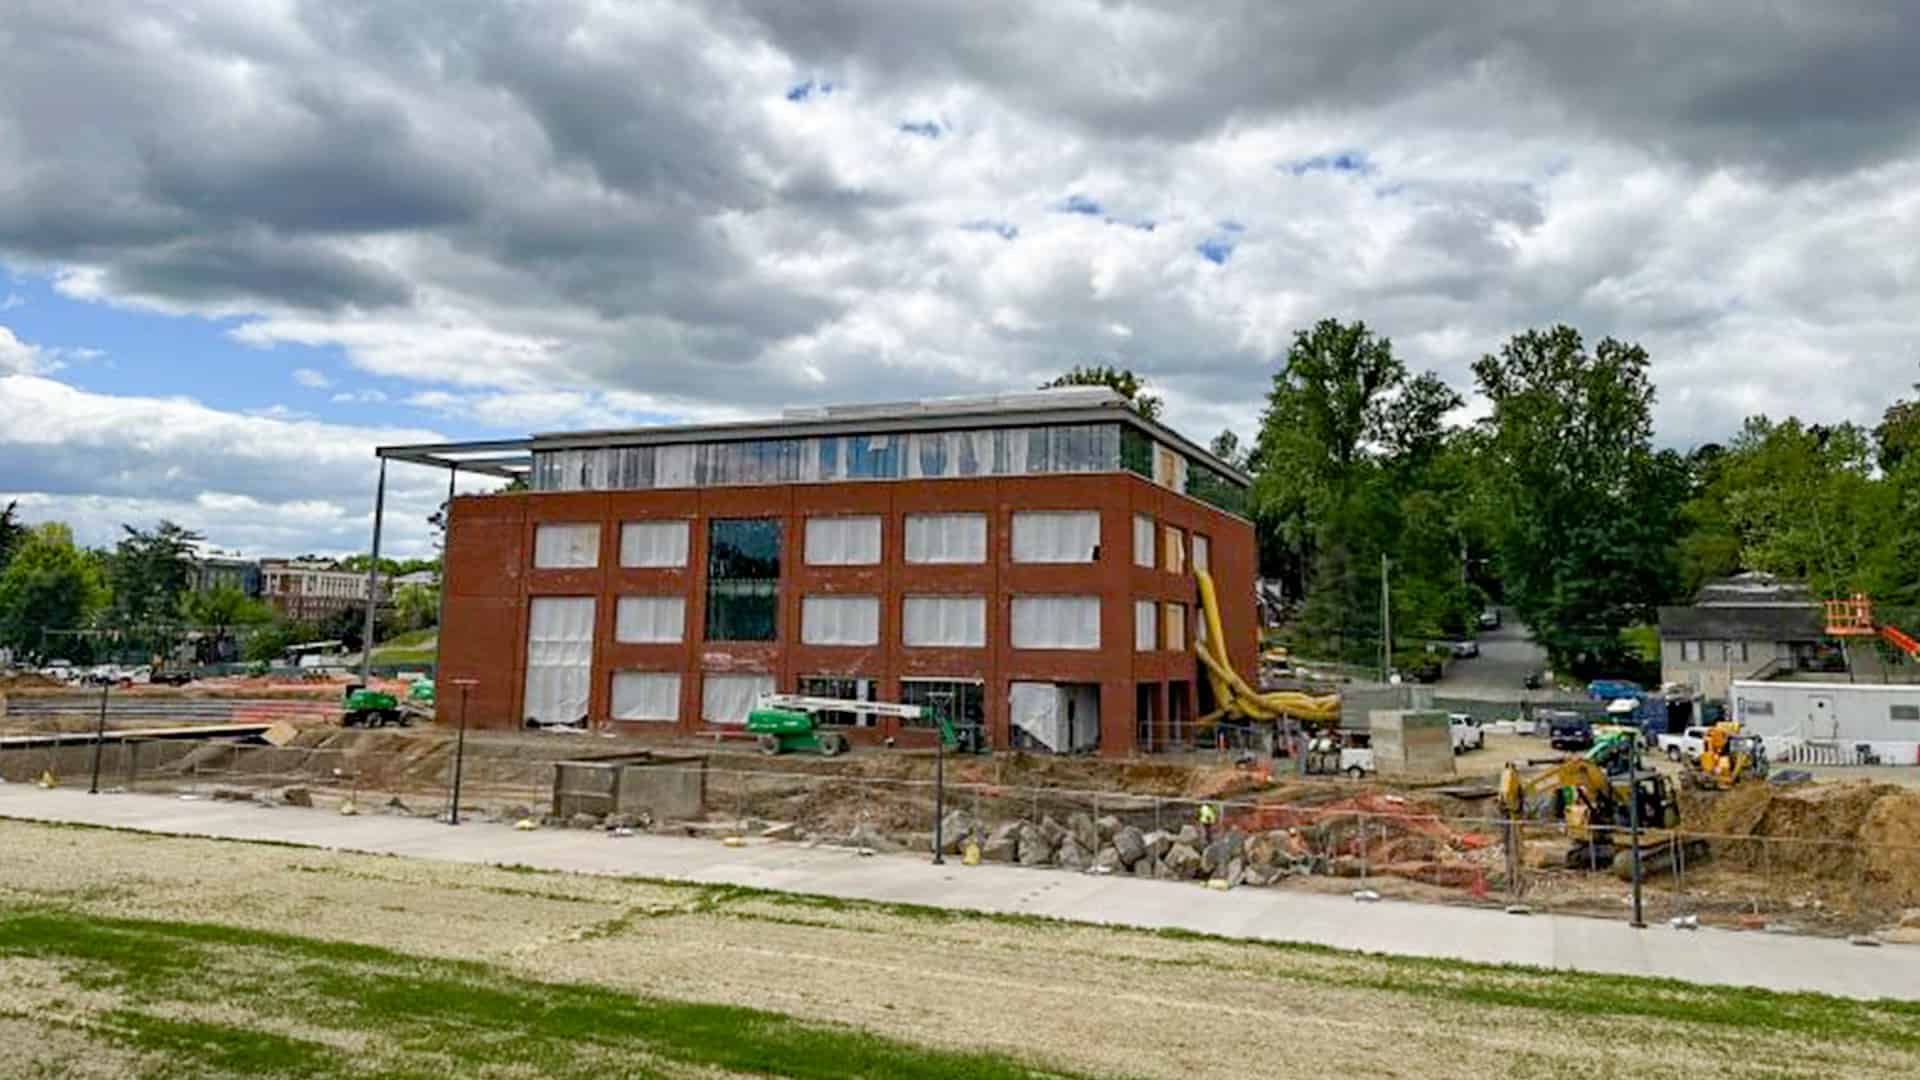 UVA Data Sciences building under construction